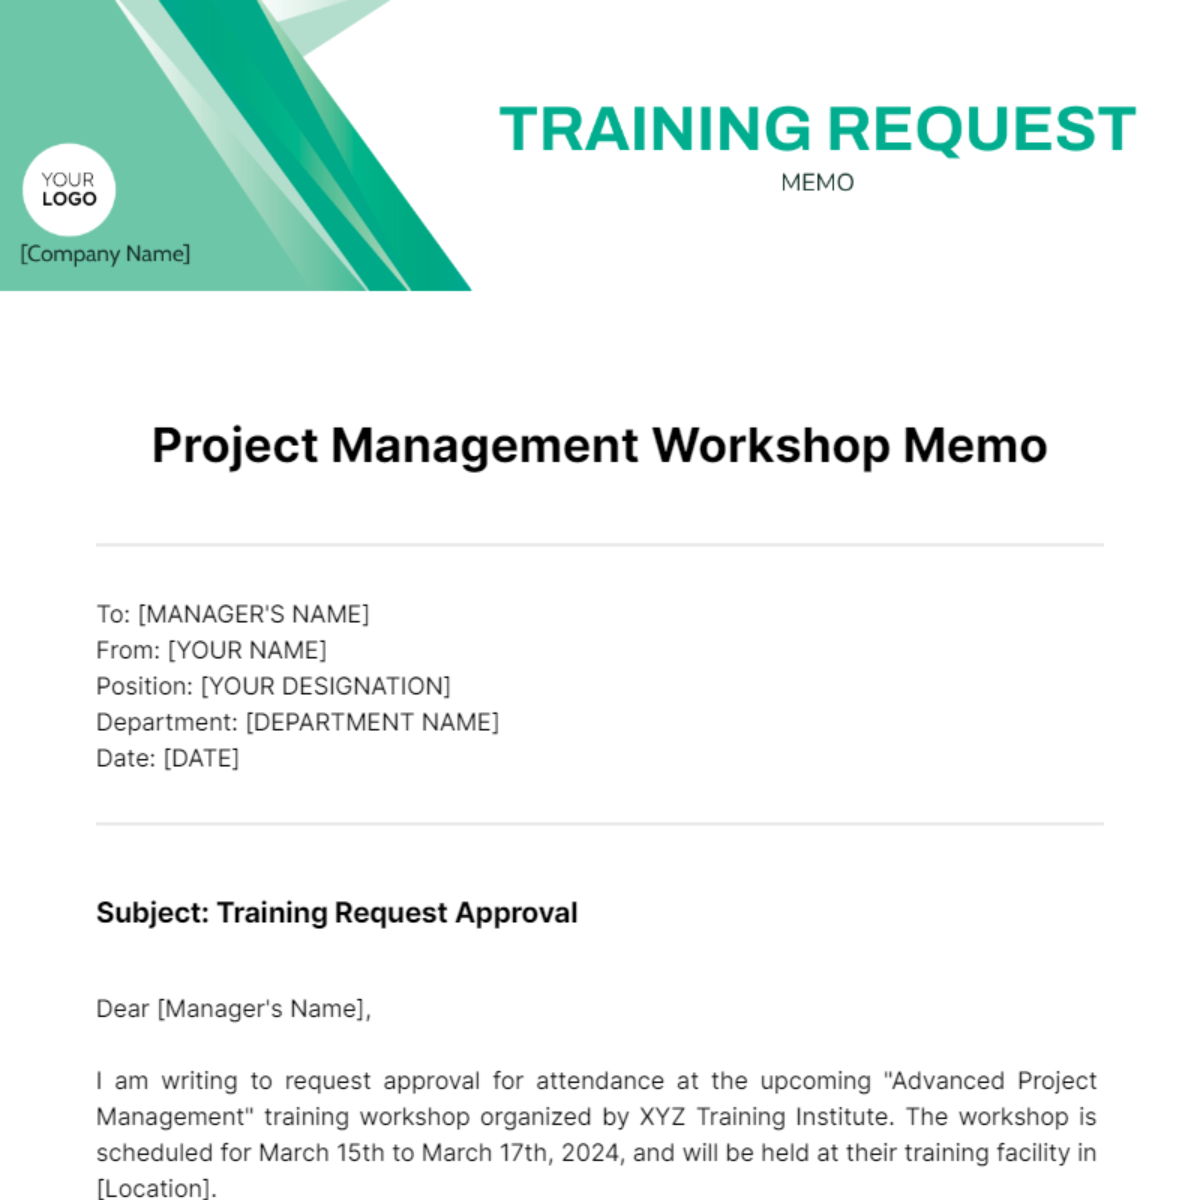 Training Request Memo Template